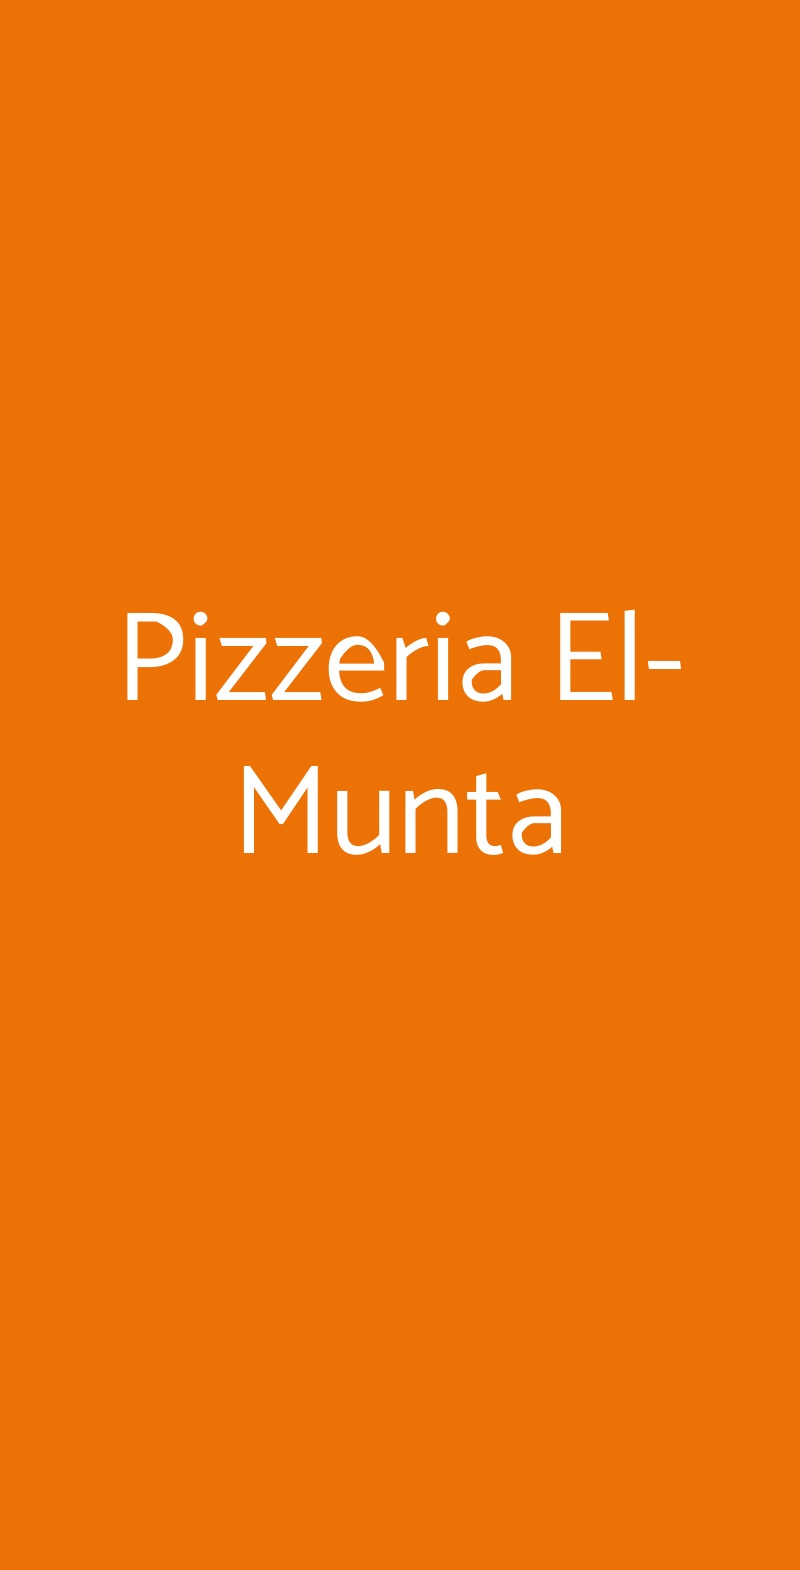 Pizzeria El-Munta Roma menù 1 pagina